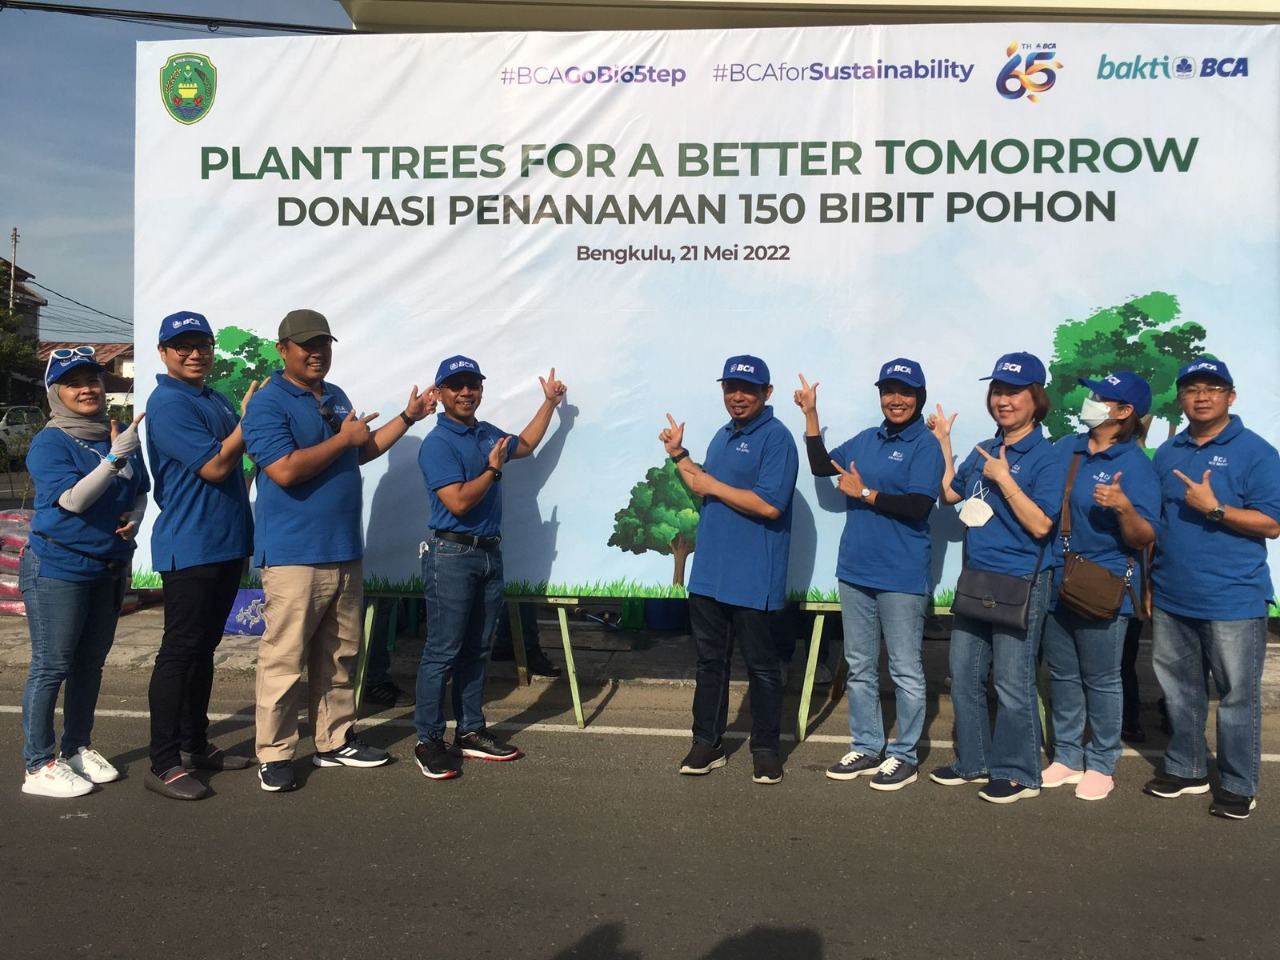 Dukung Program Penghijauan, BCA dan Pemkot Bengkulu Tanam 150 Bibit Pohon Ketapang